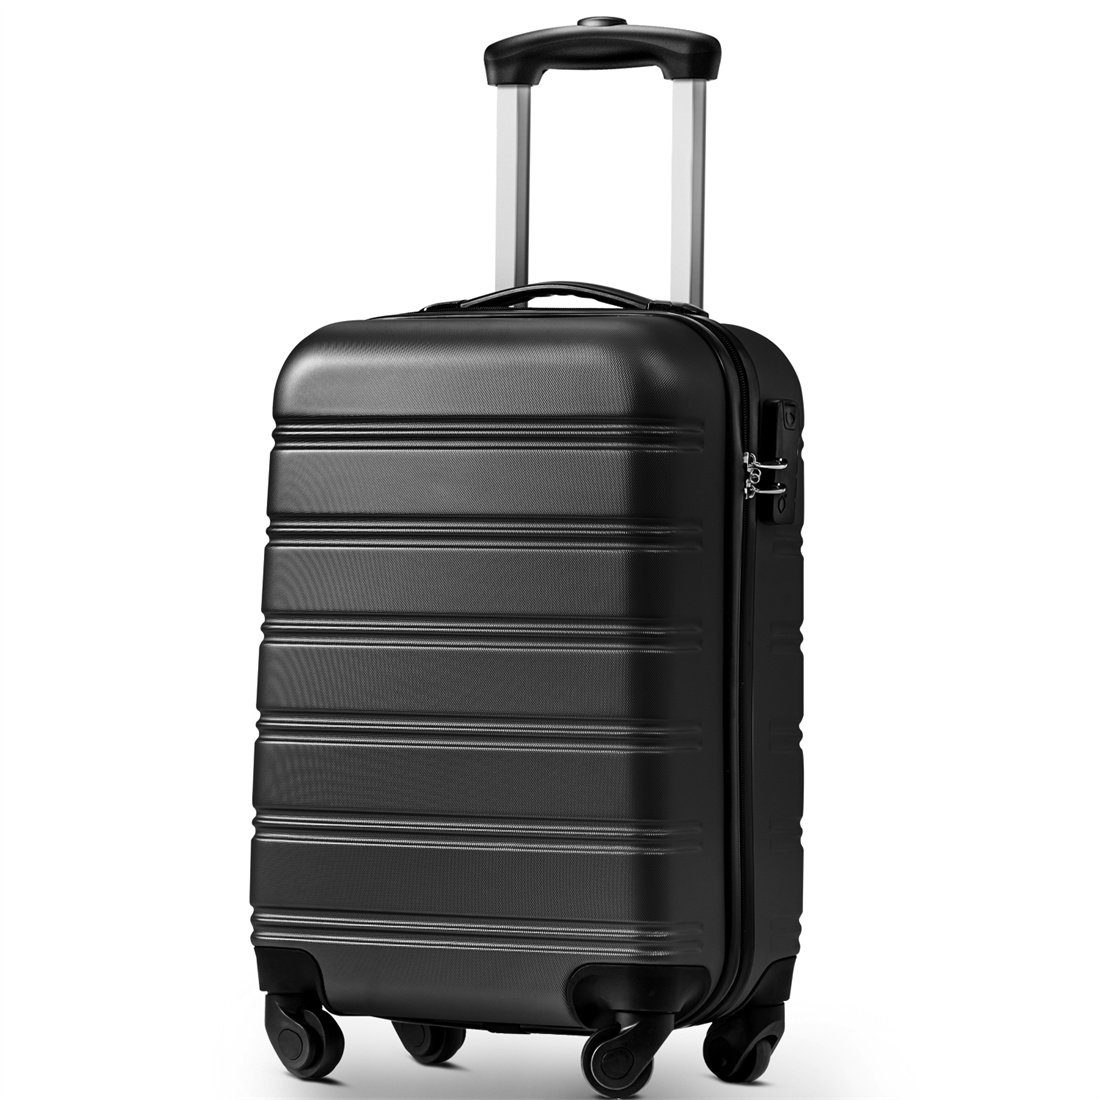 DÖRÖY Koffer schwarz Hartschalen-Koffer,Rollkoffer,Reisekoffer,55*36*22.5cm,